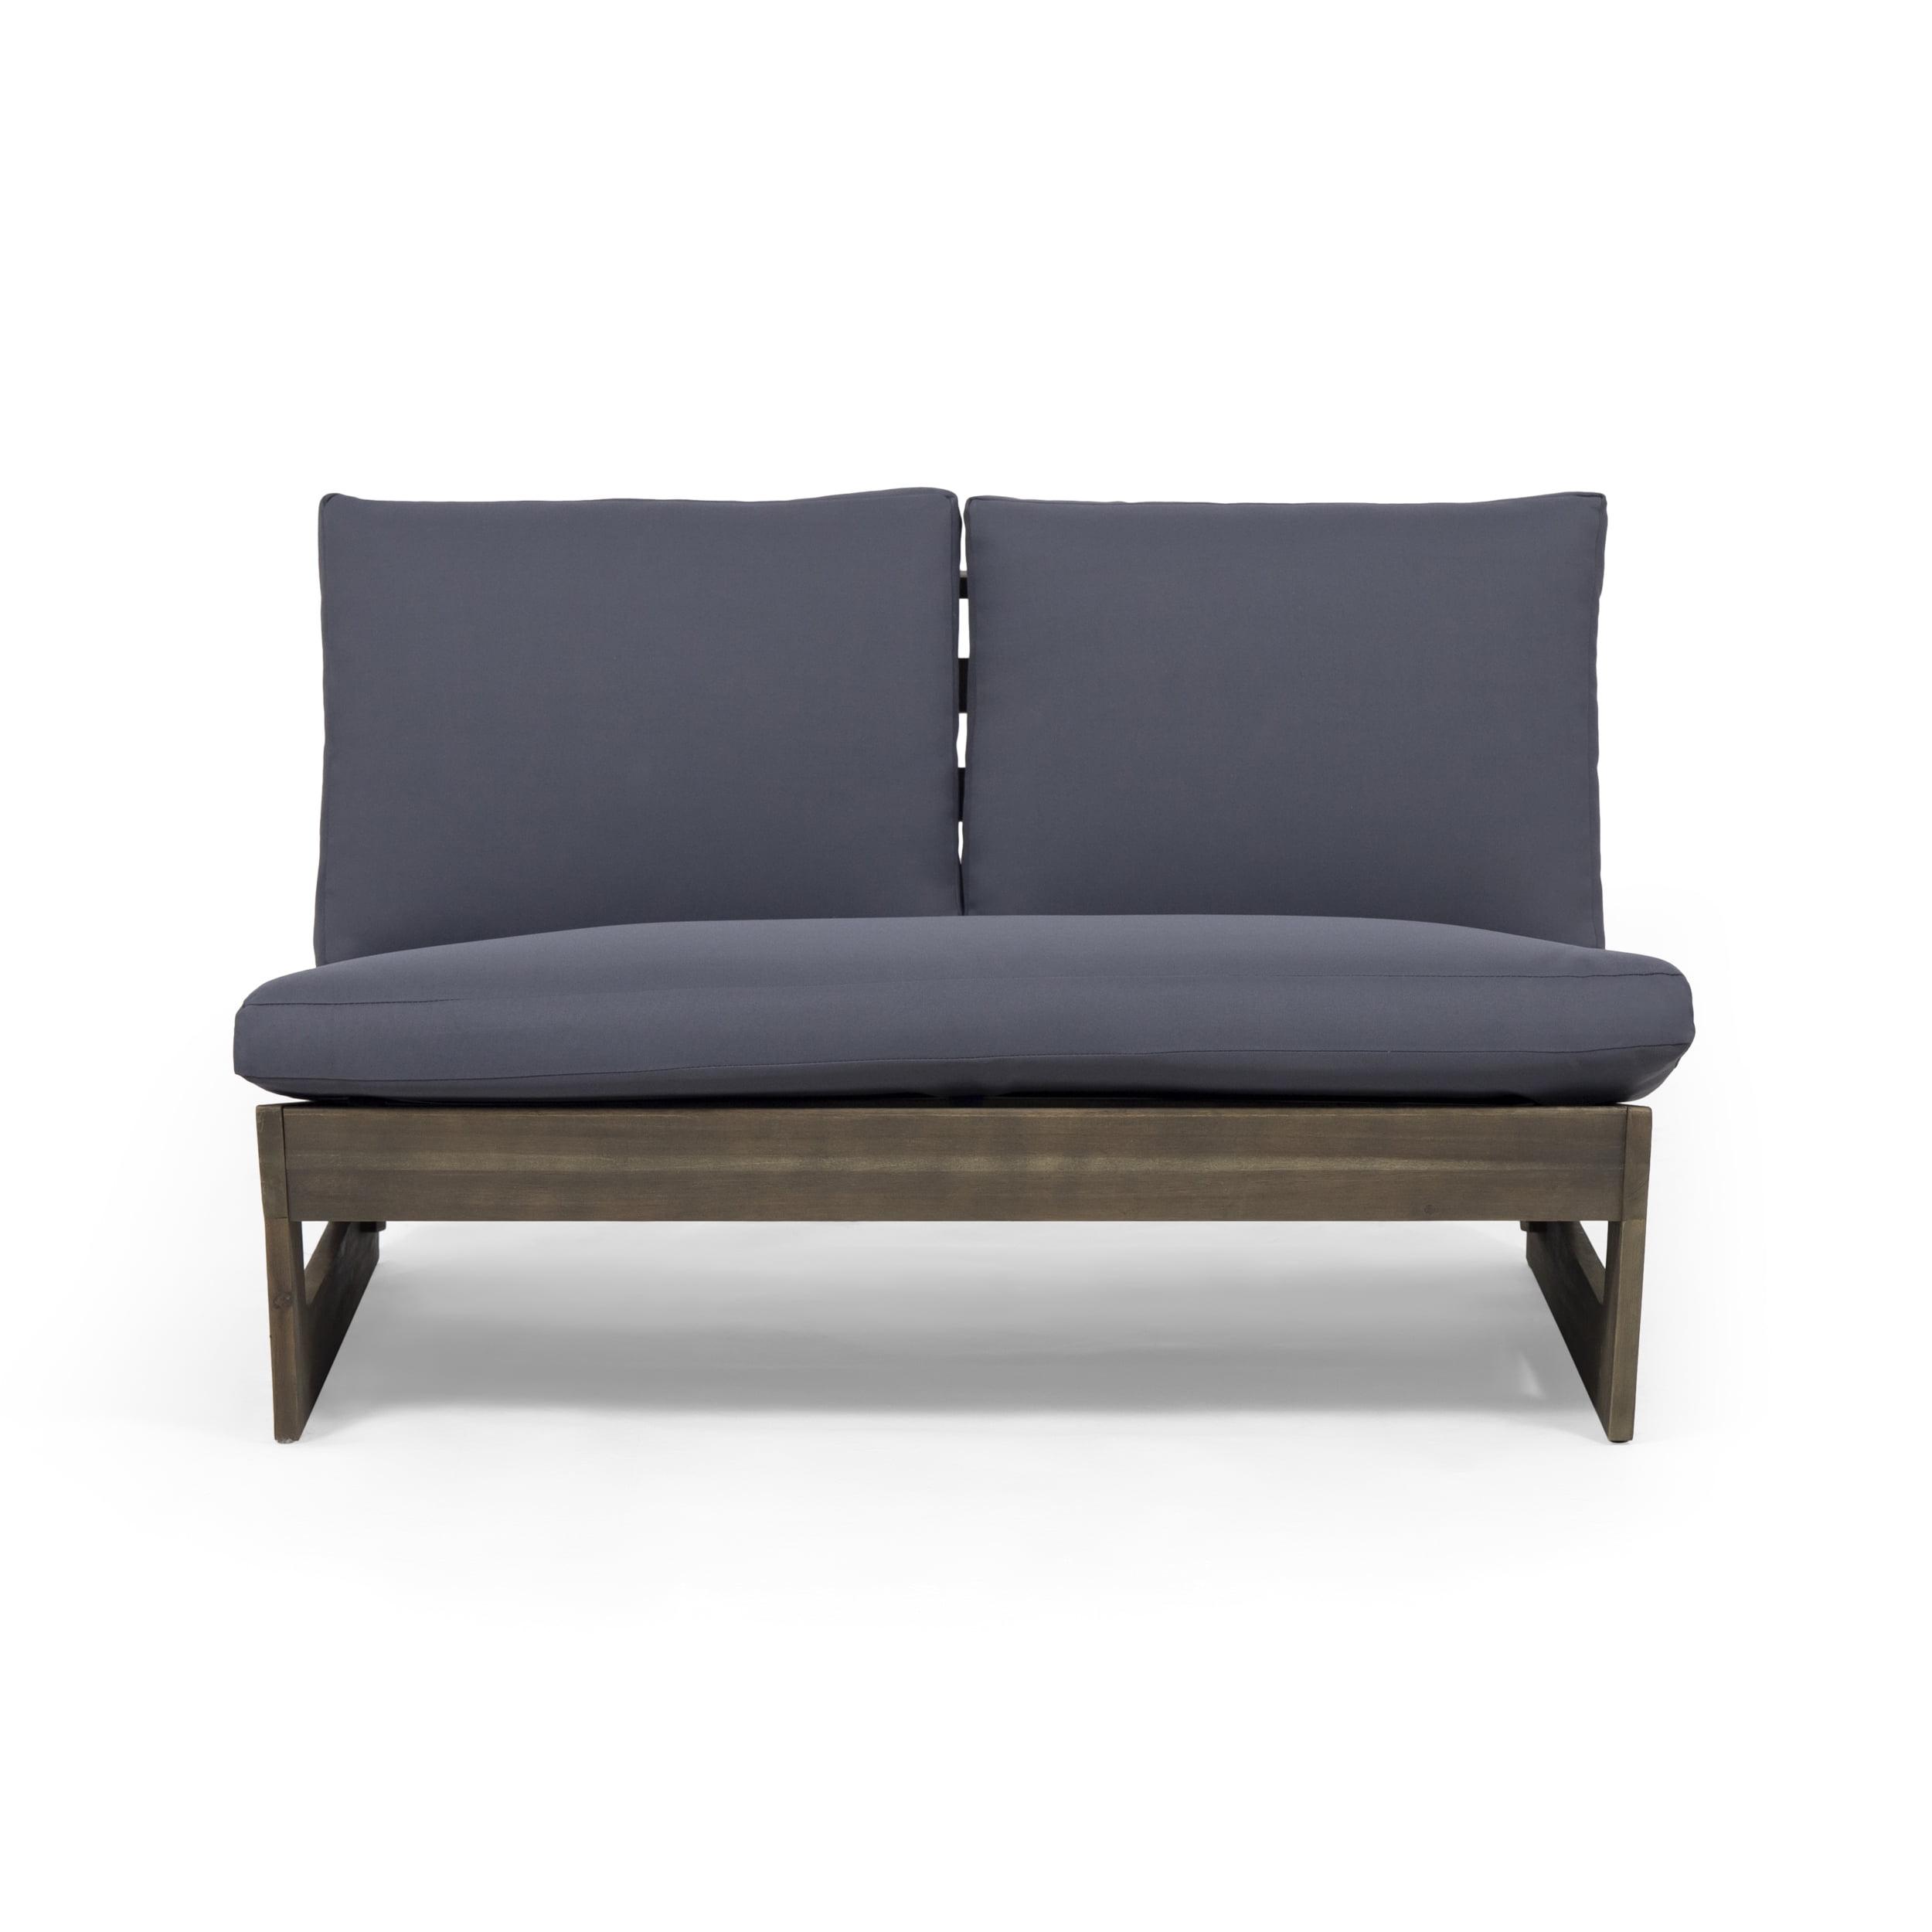 Sleek Grey Acacia Wood Loveseat with Water-Resistant Dark Grey Cushions